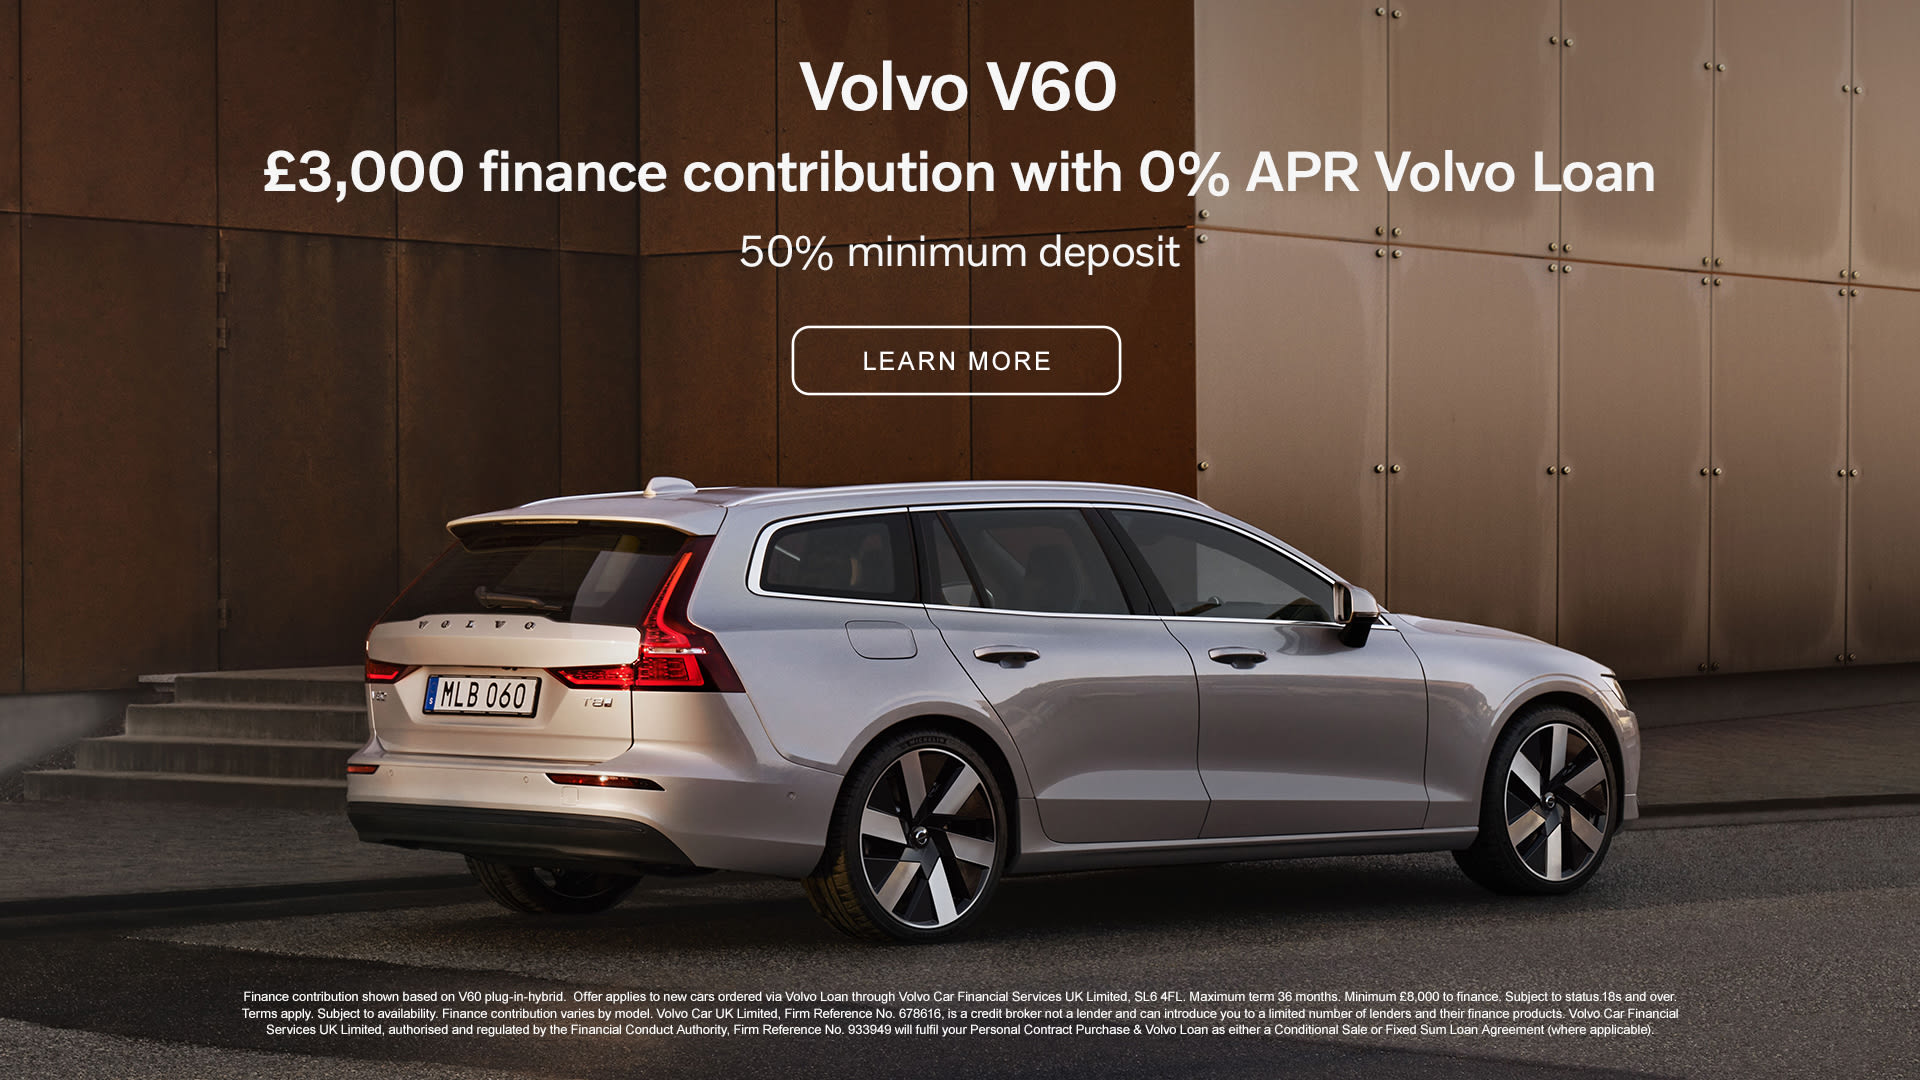 New Volvo V60 Offers